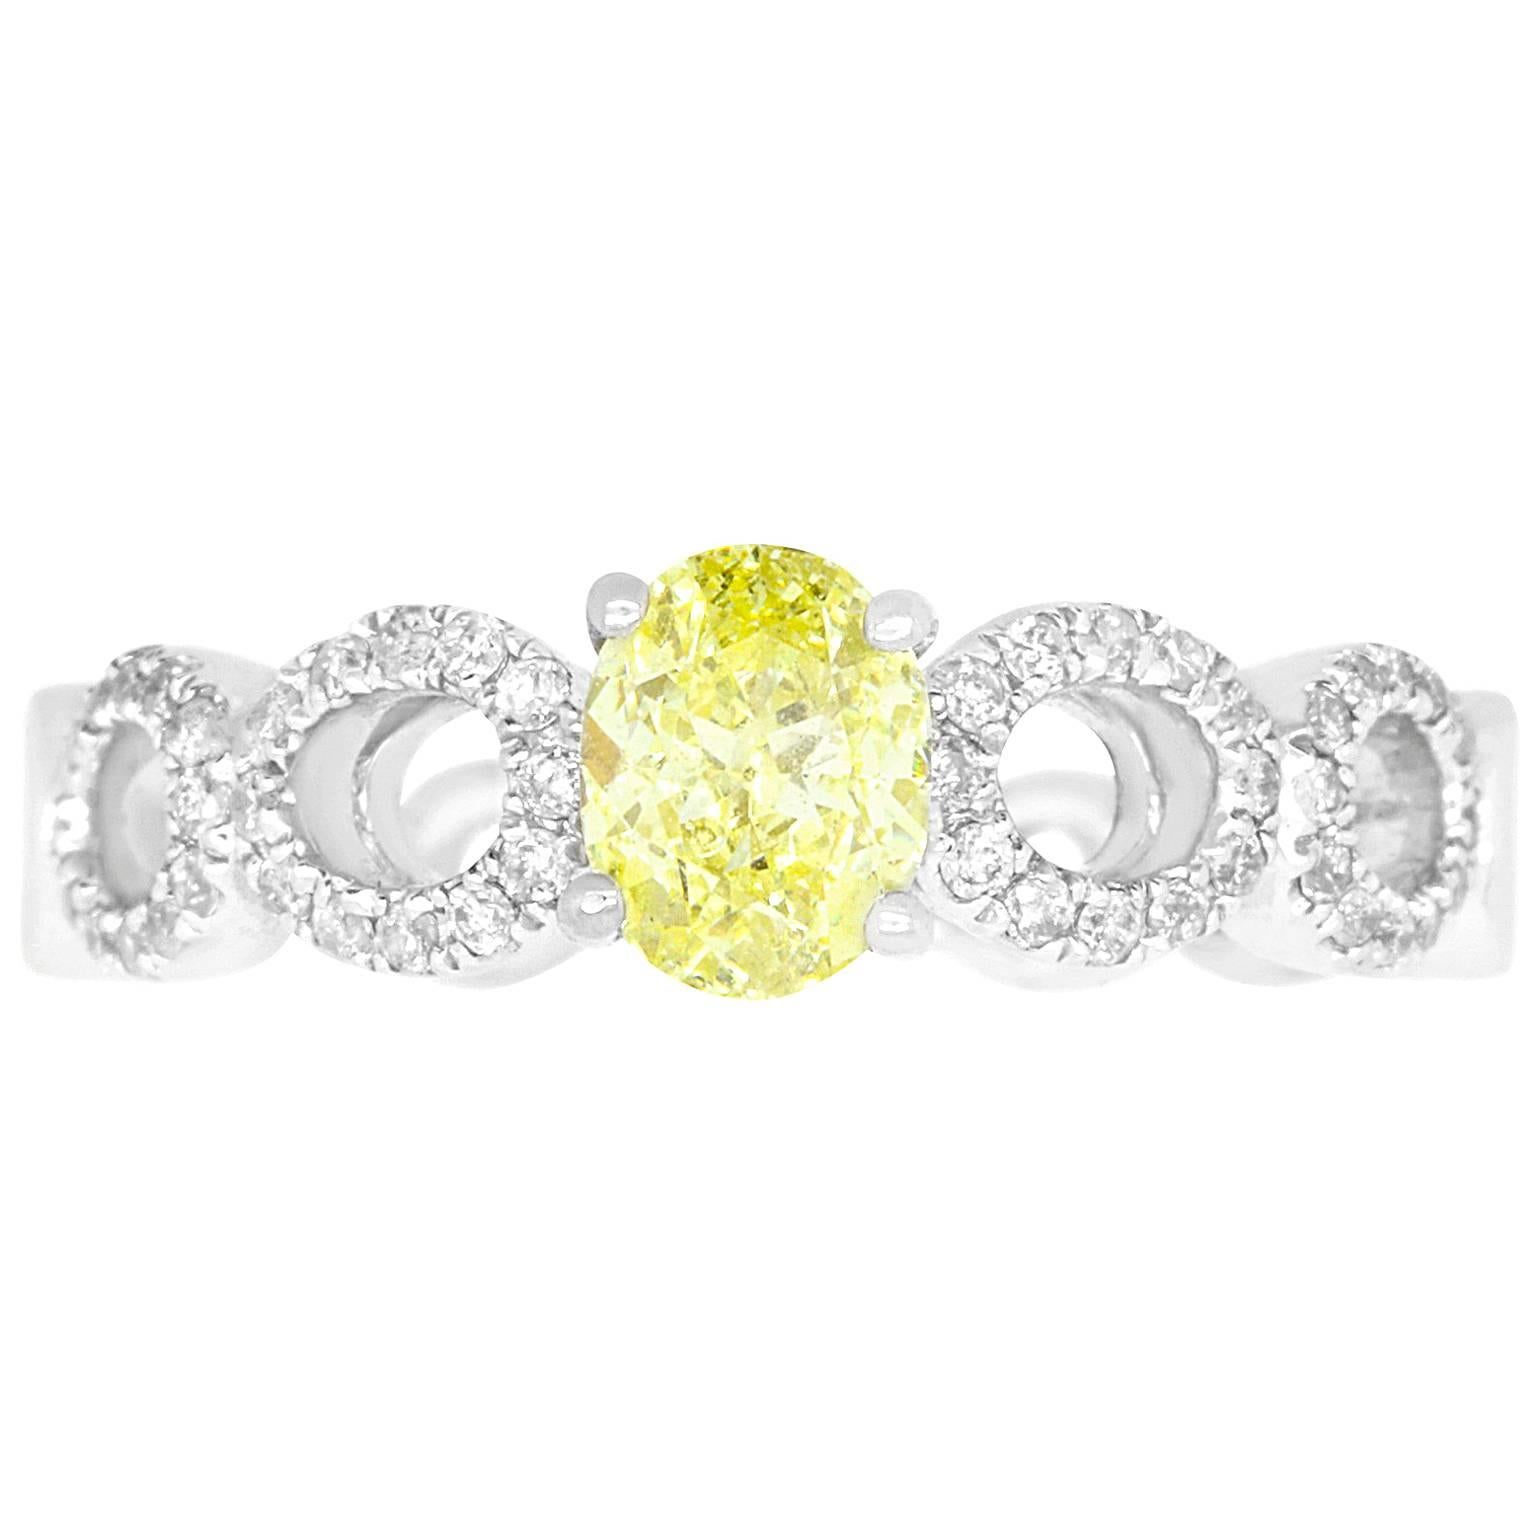 0.71 Carat Oval Cut Yellow Diamond Engagement Ring